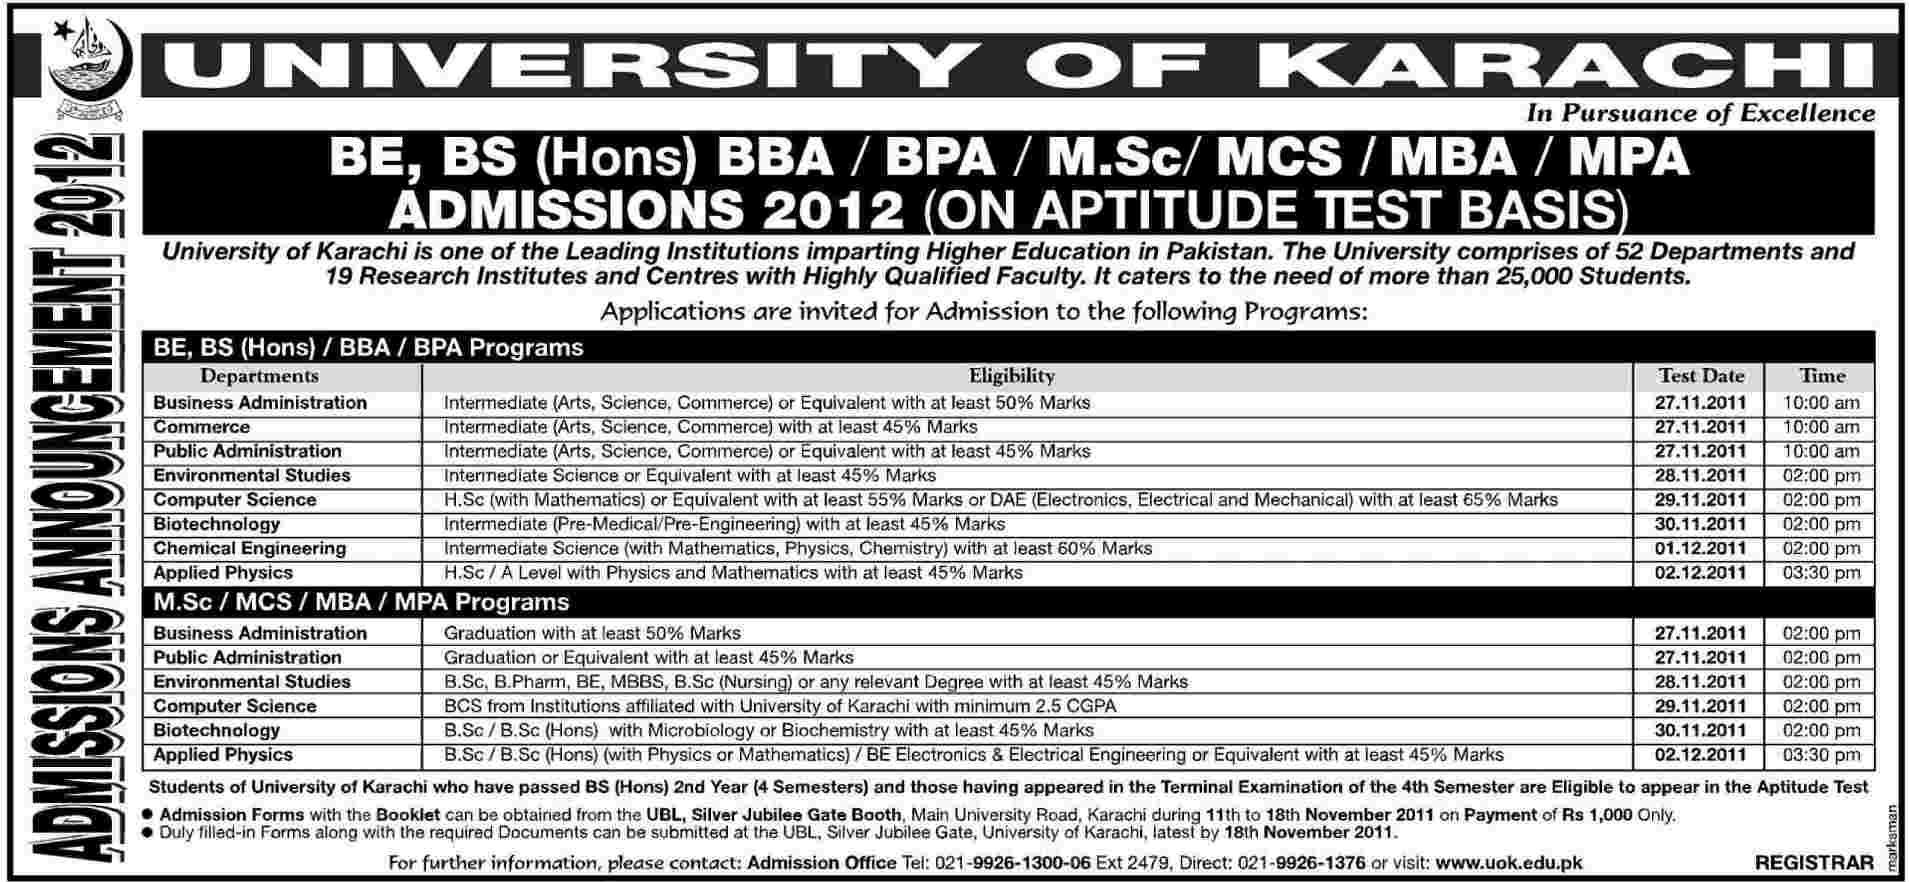 university-of-karachi-announces-b-e-bs-hons-bba-bpa-m-sc-mcs-mba-mpa-admissions-2012